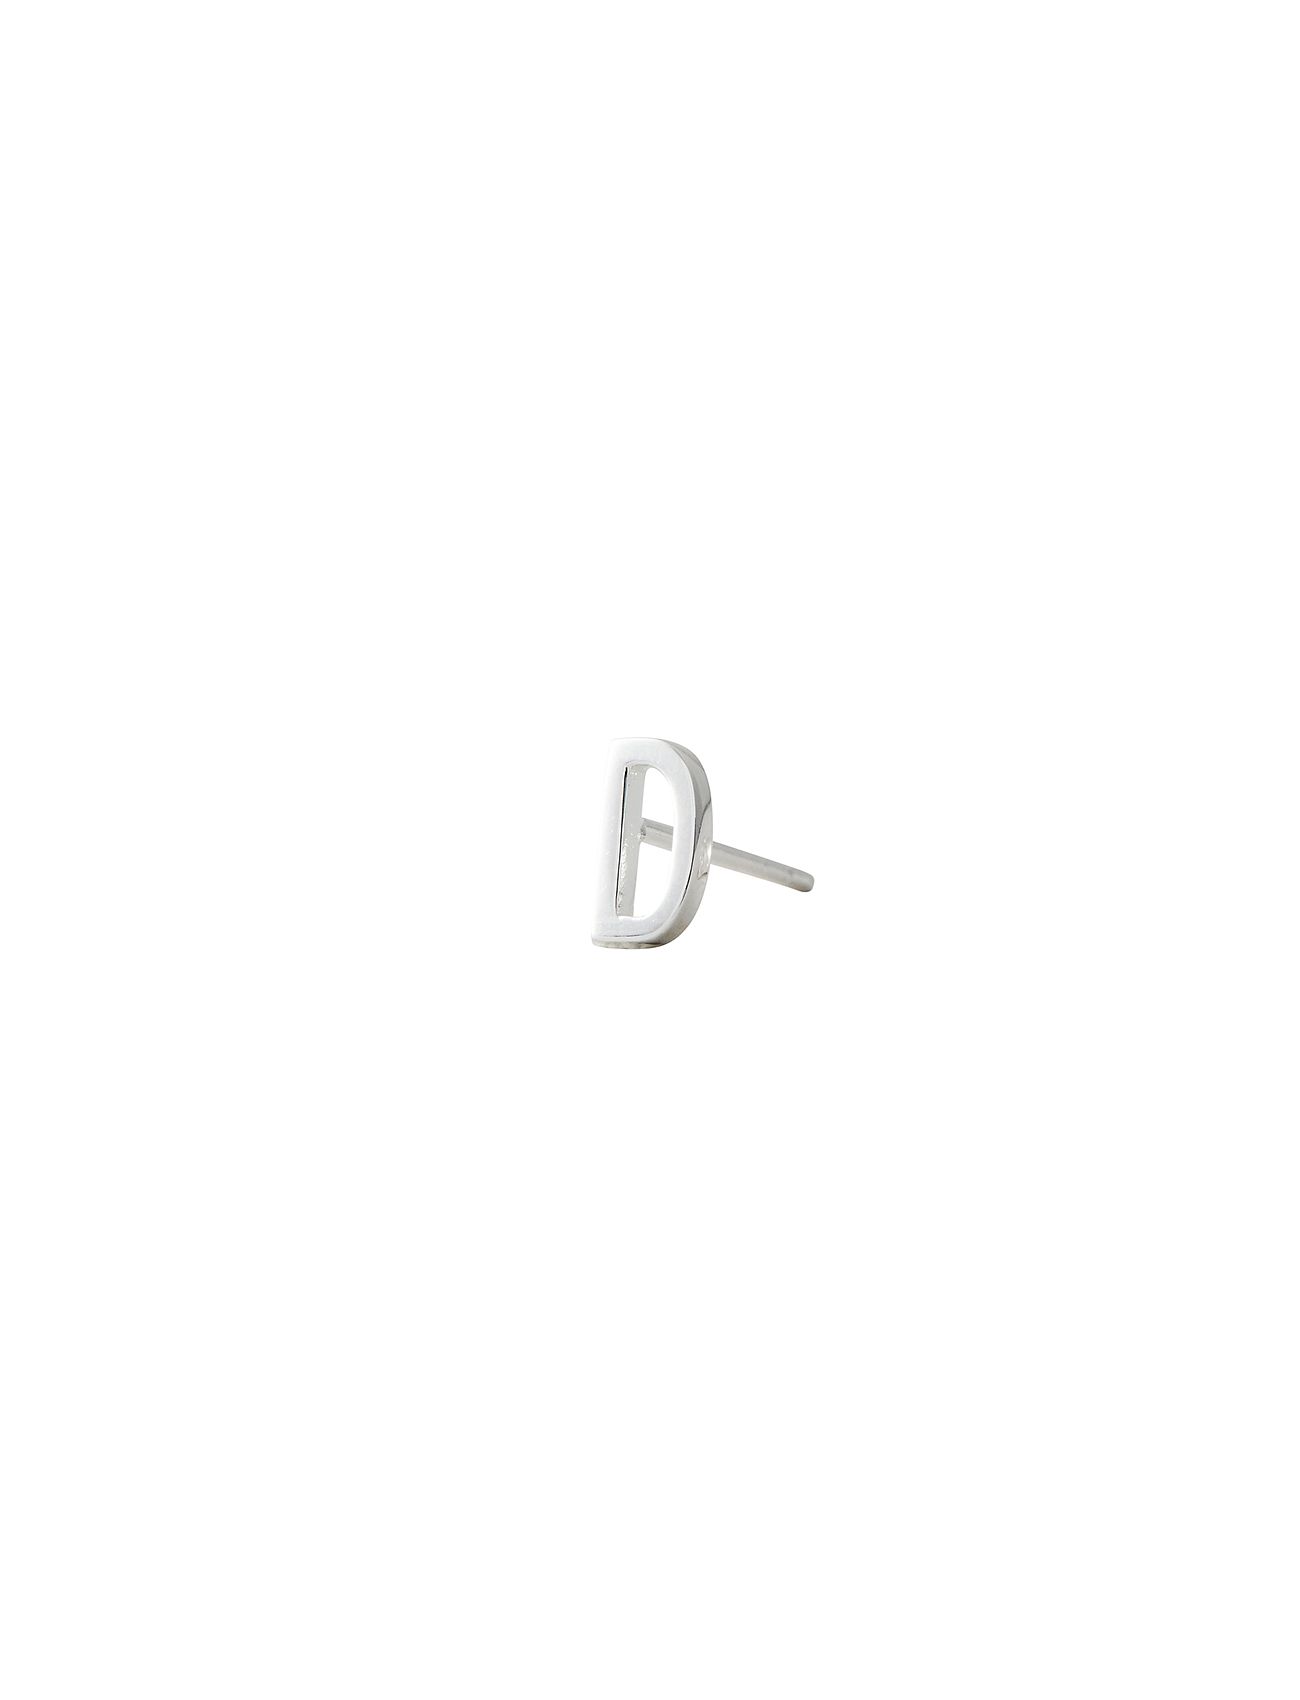 Earring Studs Archetypes, Silver, A-Z Accessories Jewellery Earrings Studs Hopea Design Letters